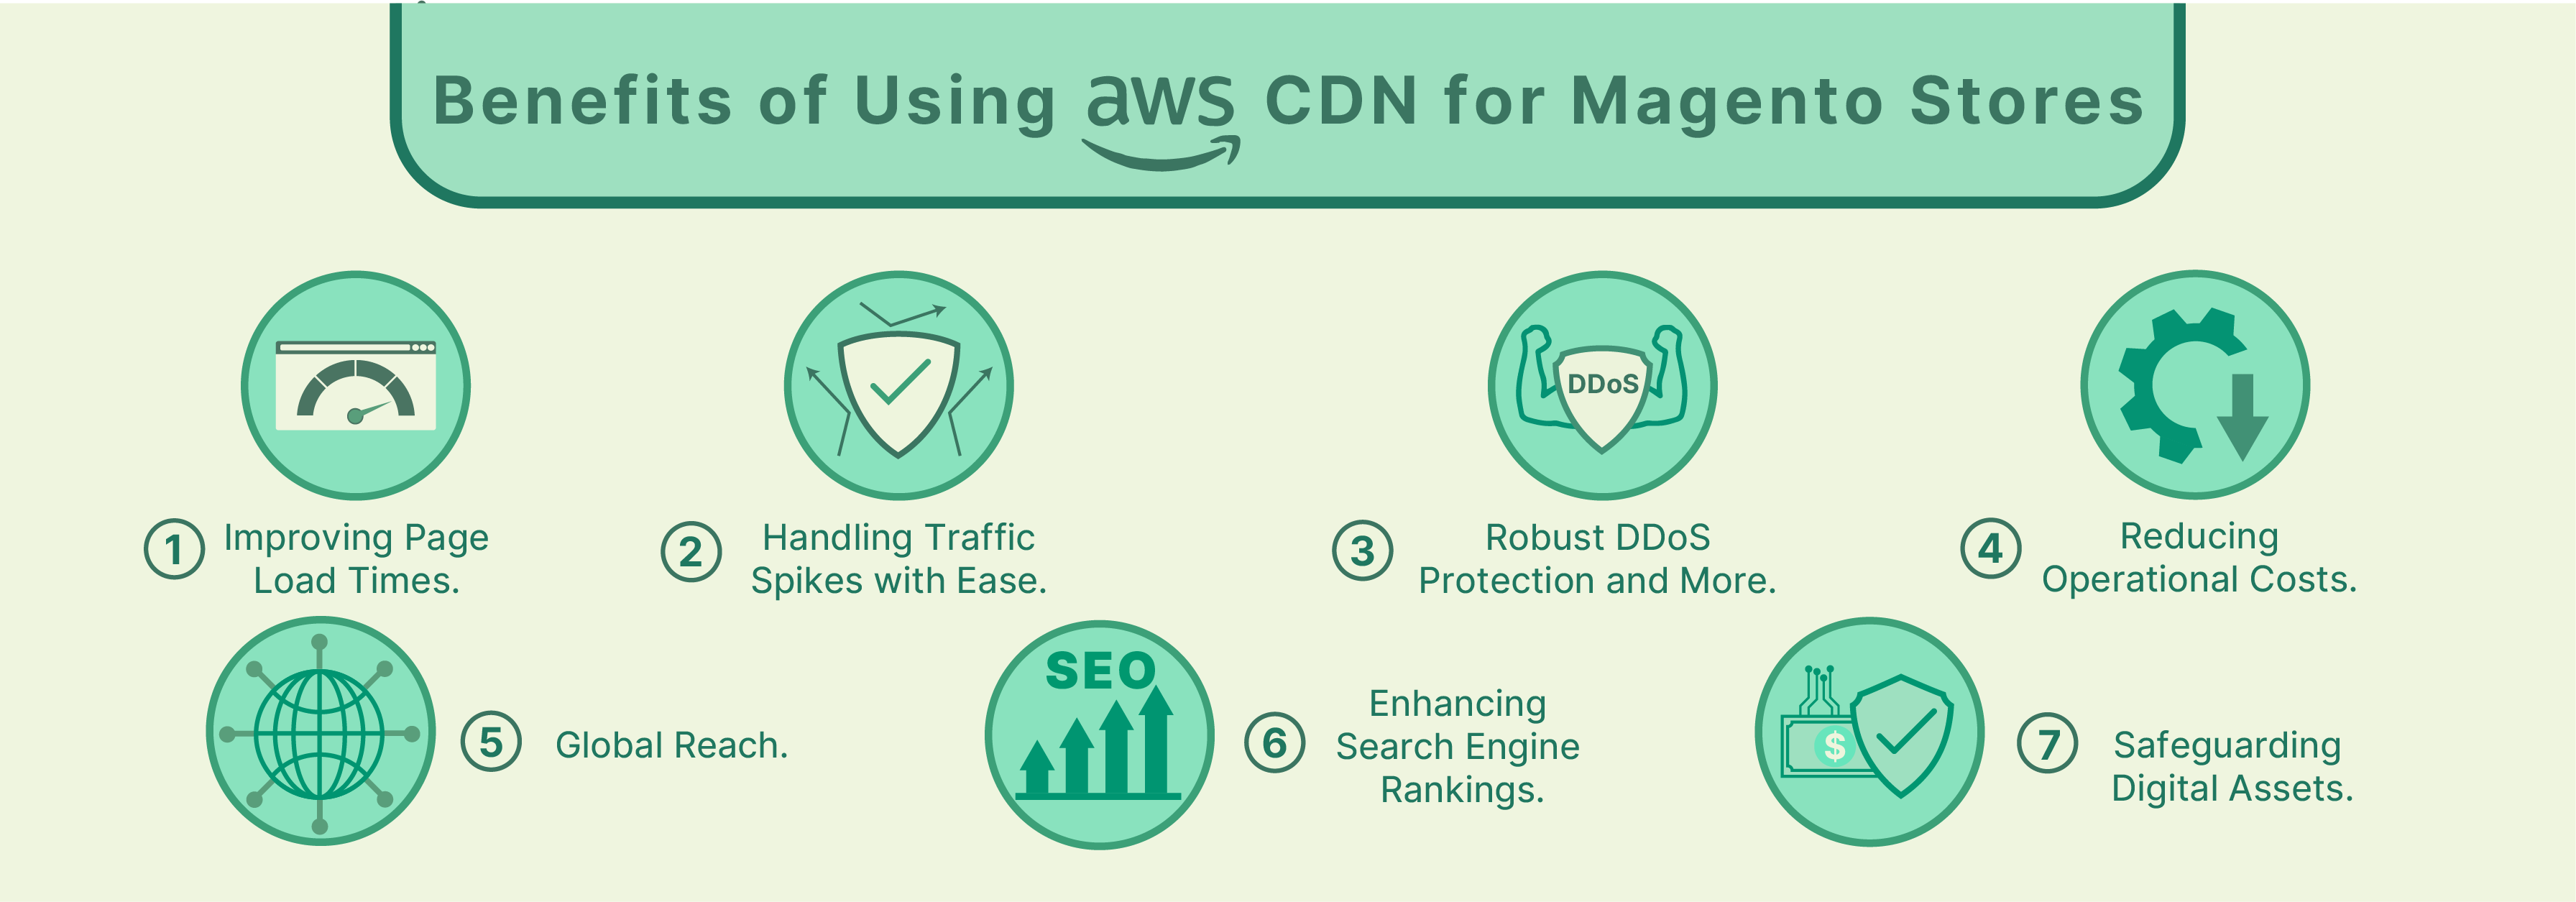 Best Hosting for Magento Ecommerce AWS CDN Benefits